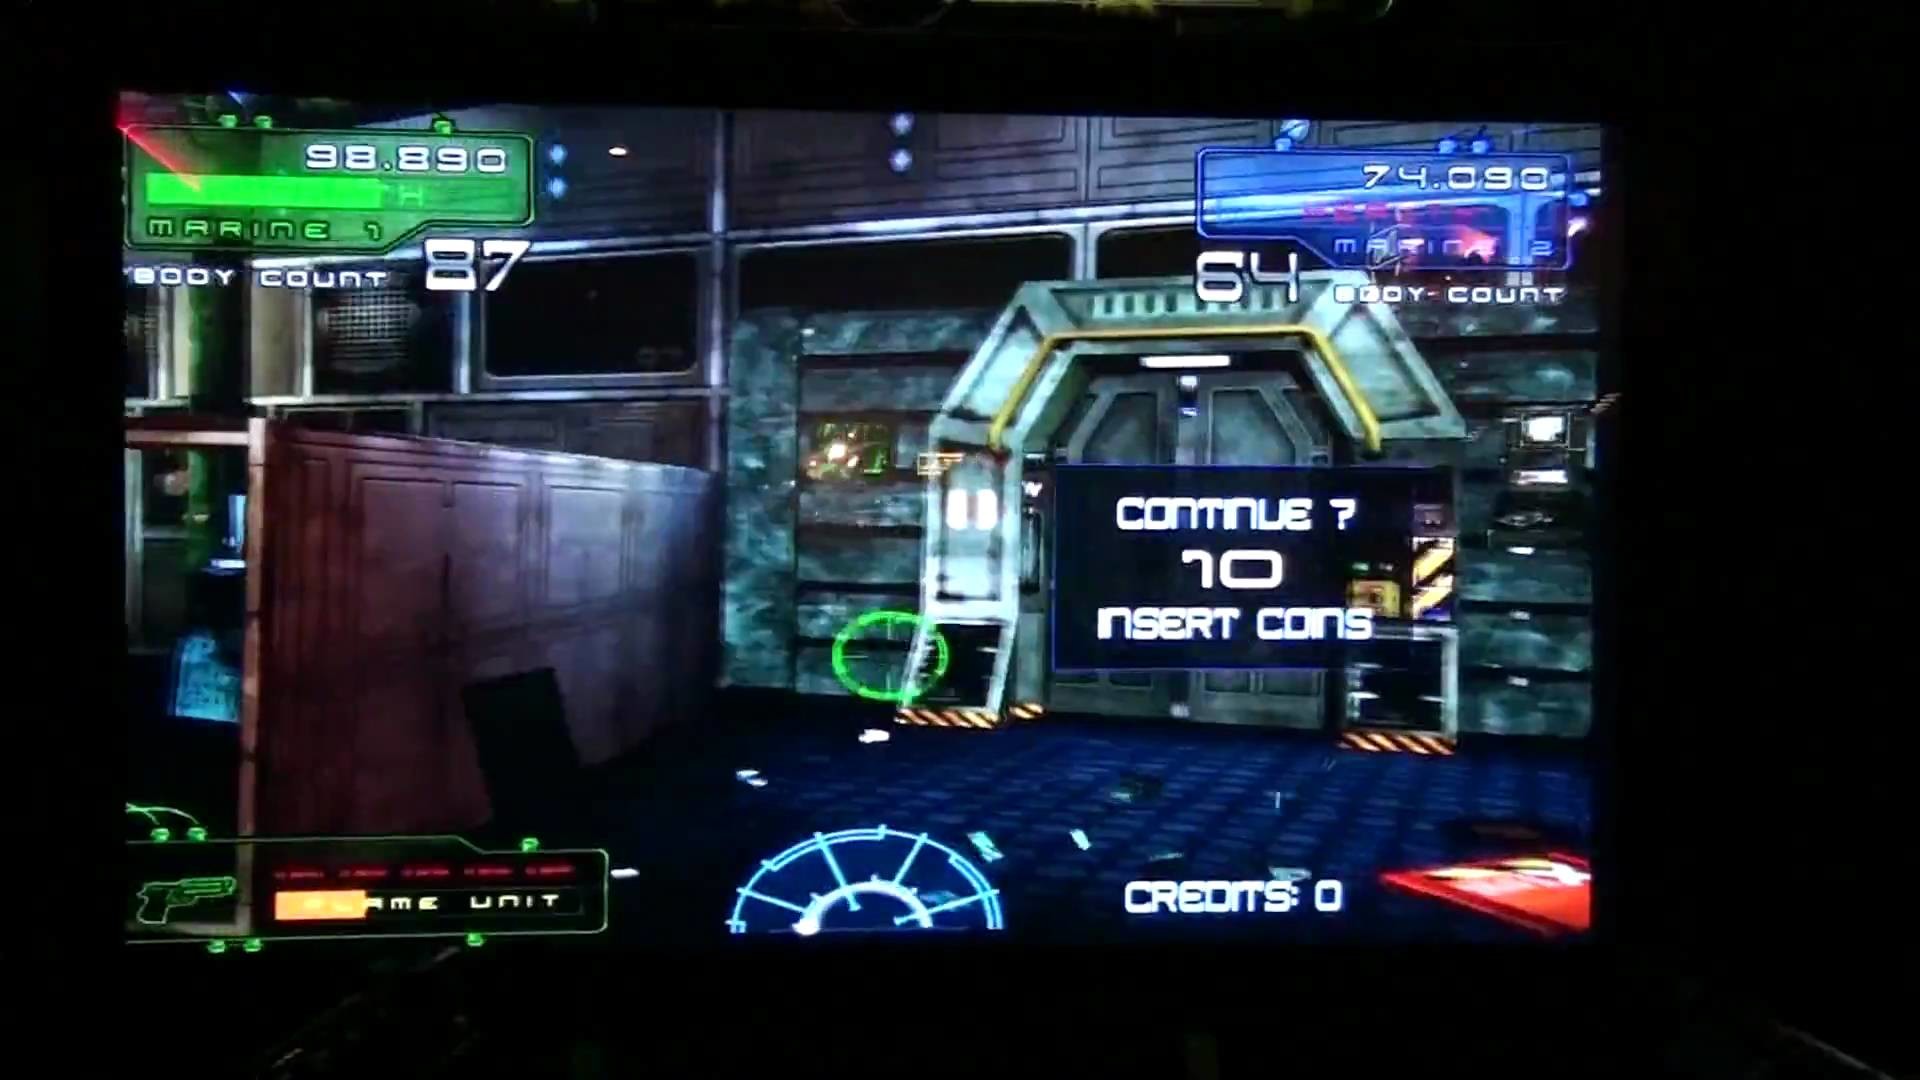 1920x1080 Aliens Extermination Arcade Play (1080p HD) - YouTube